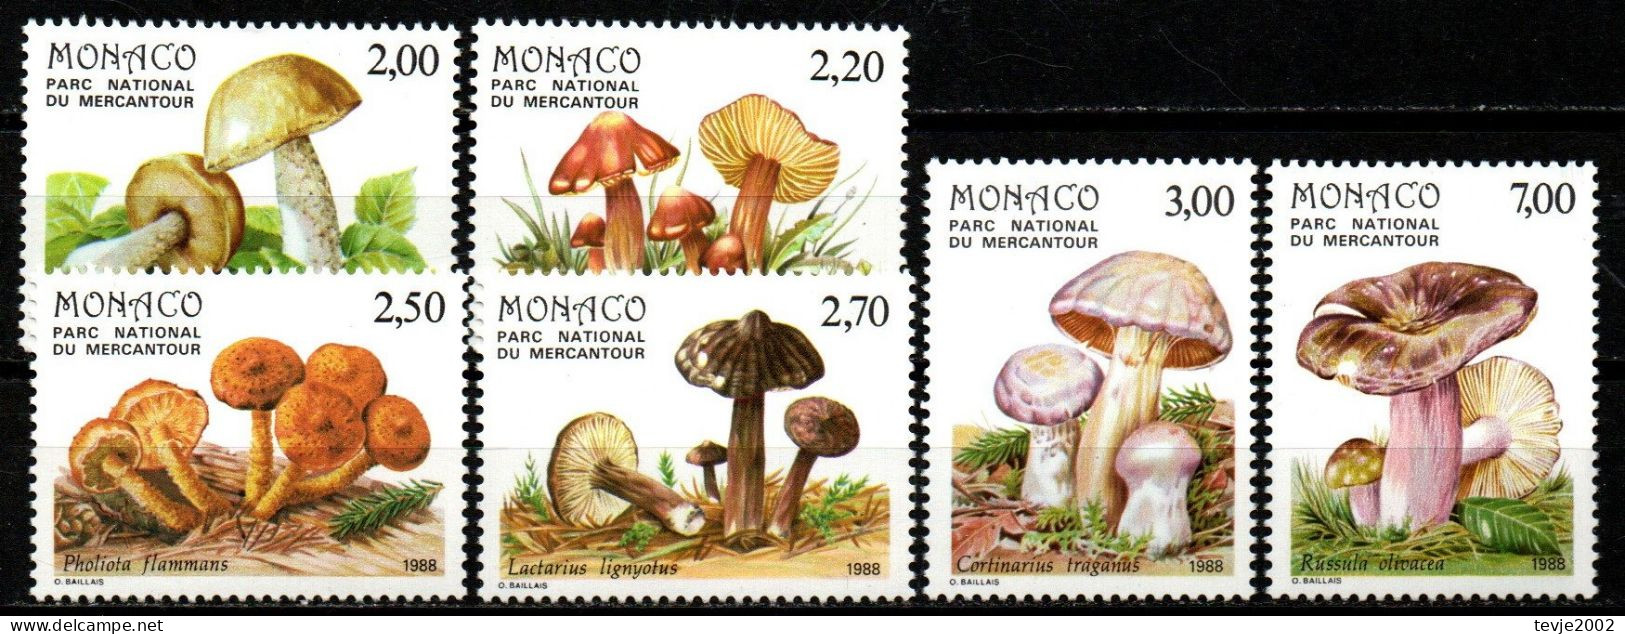 Monaco 1988 - Mi.Nr. 1861 - 1866 - Postfrisch MNH - Pilze Mushrooms - Pilze